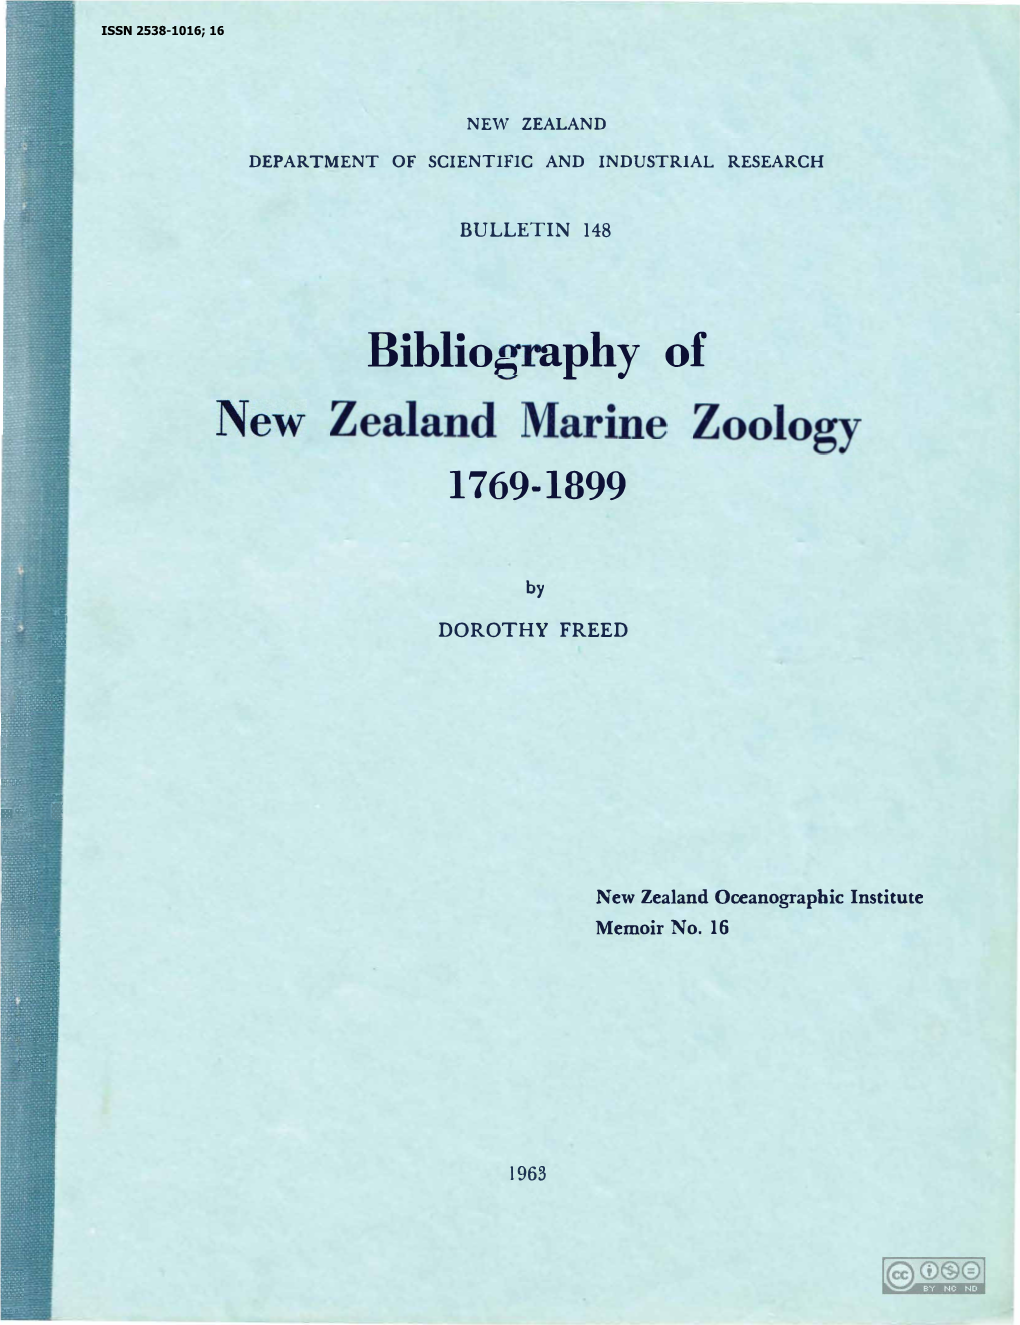 BULLETIN 148 by DOROTHY FREED New Zealand Oceanographic Institute Memoir No. 16